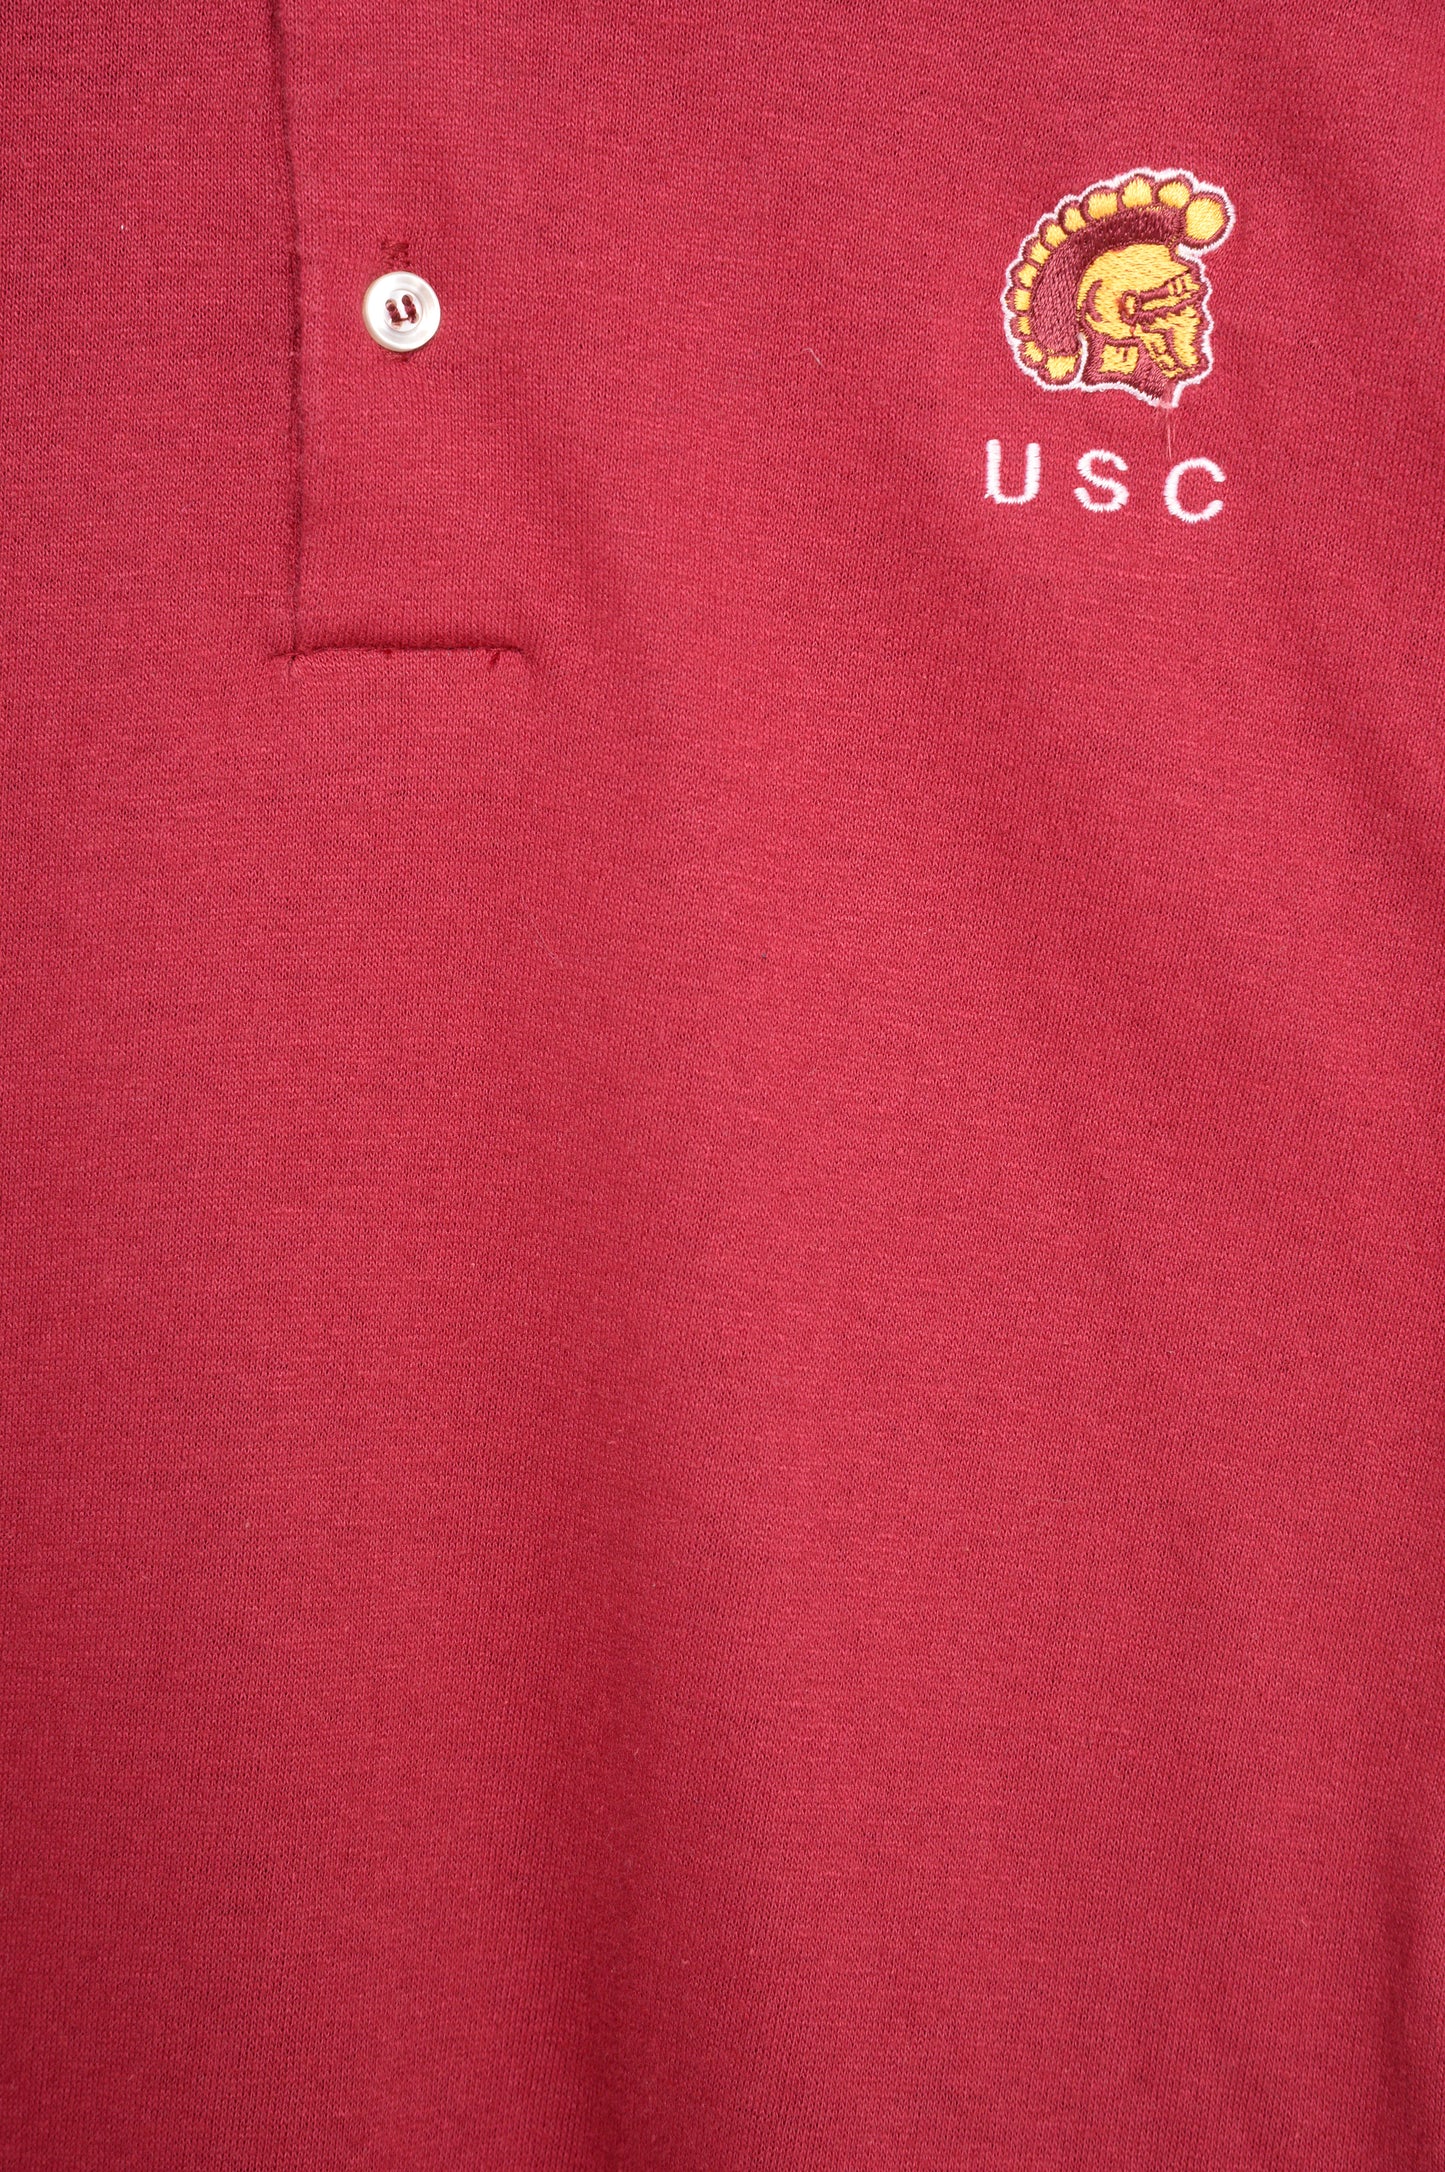 1980s University of Southern California Polo